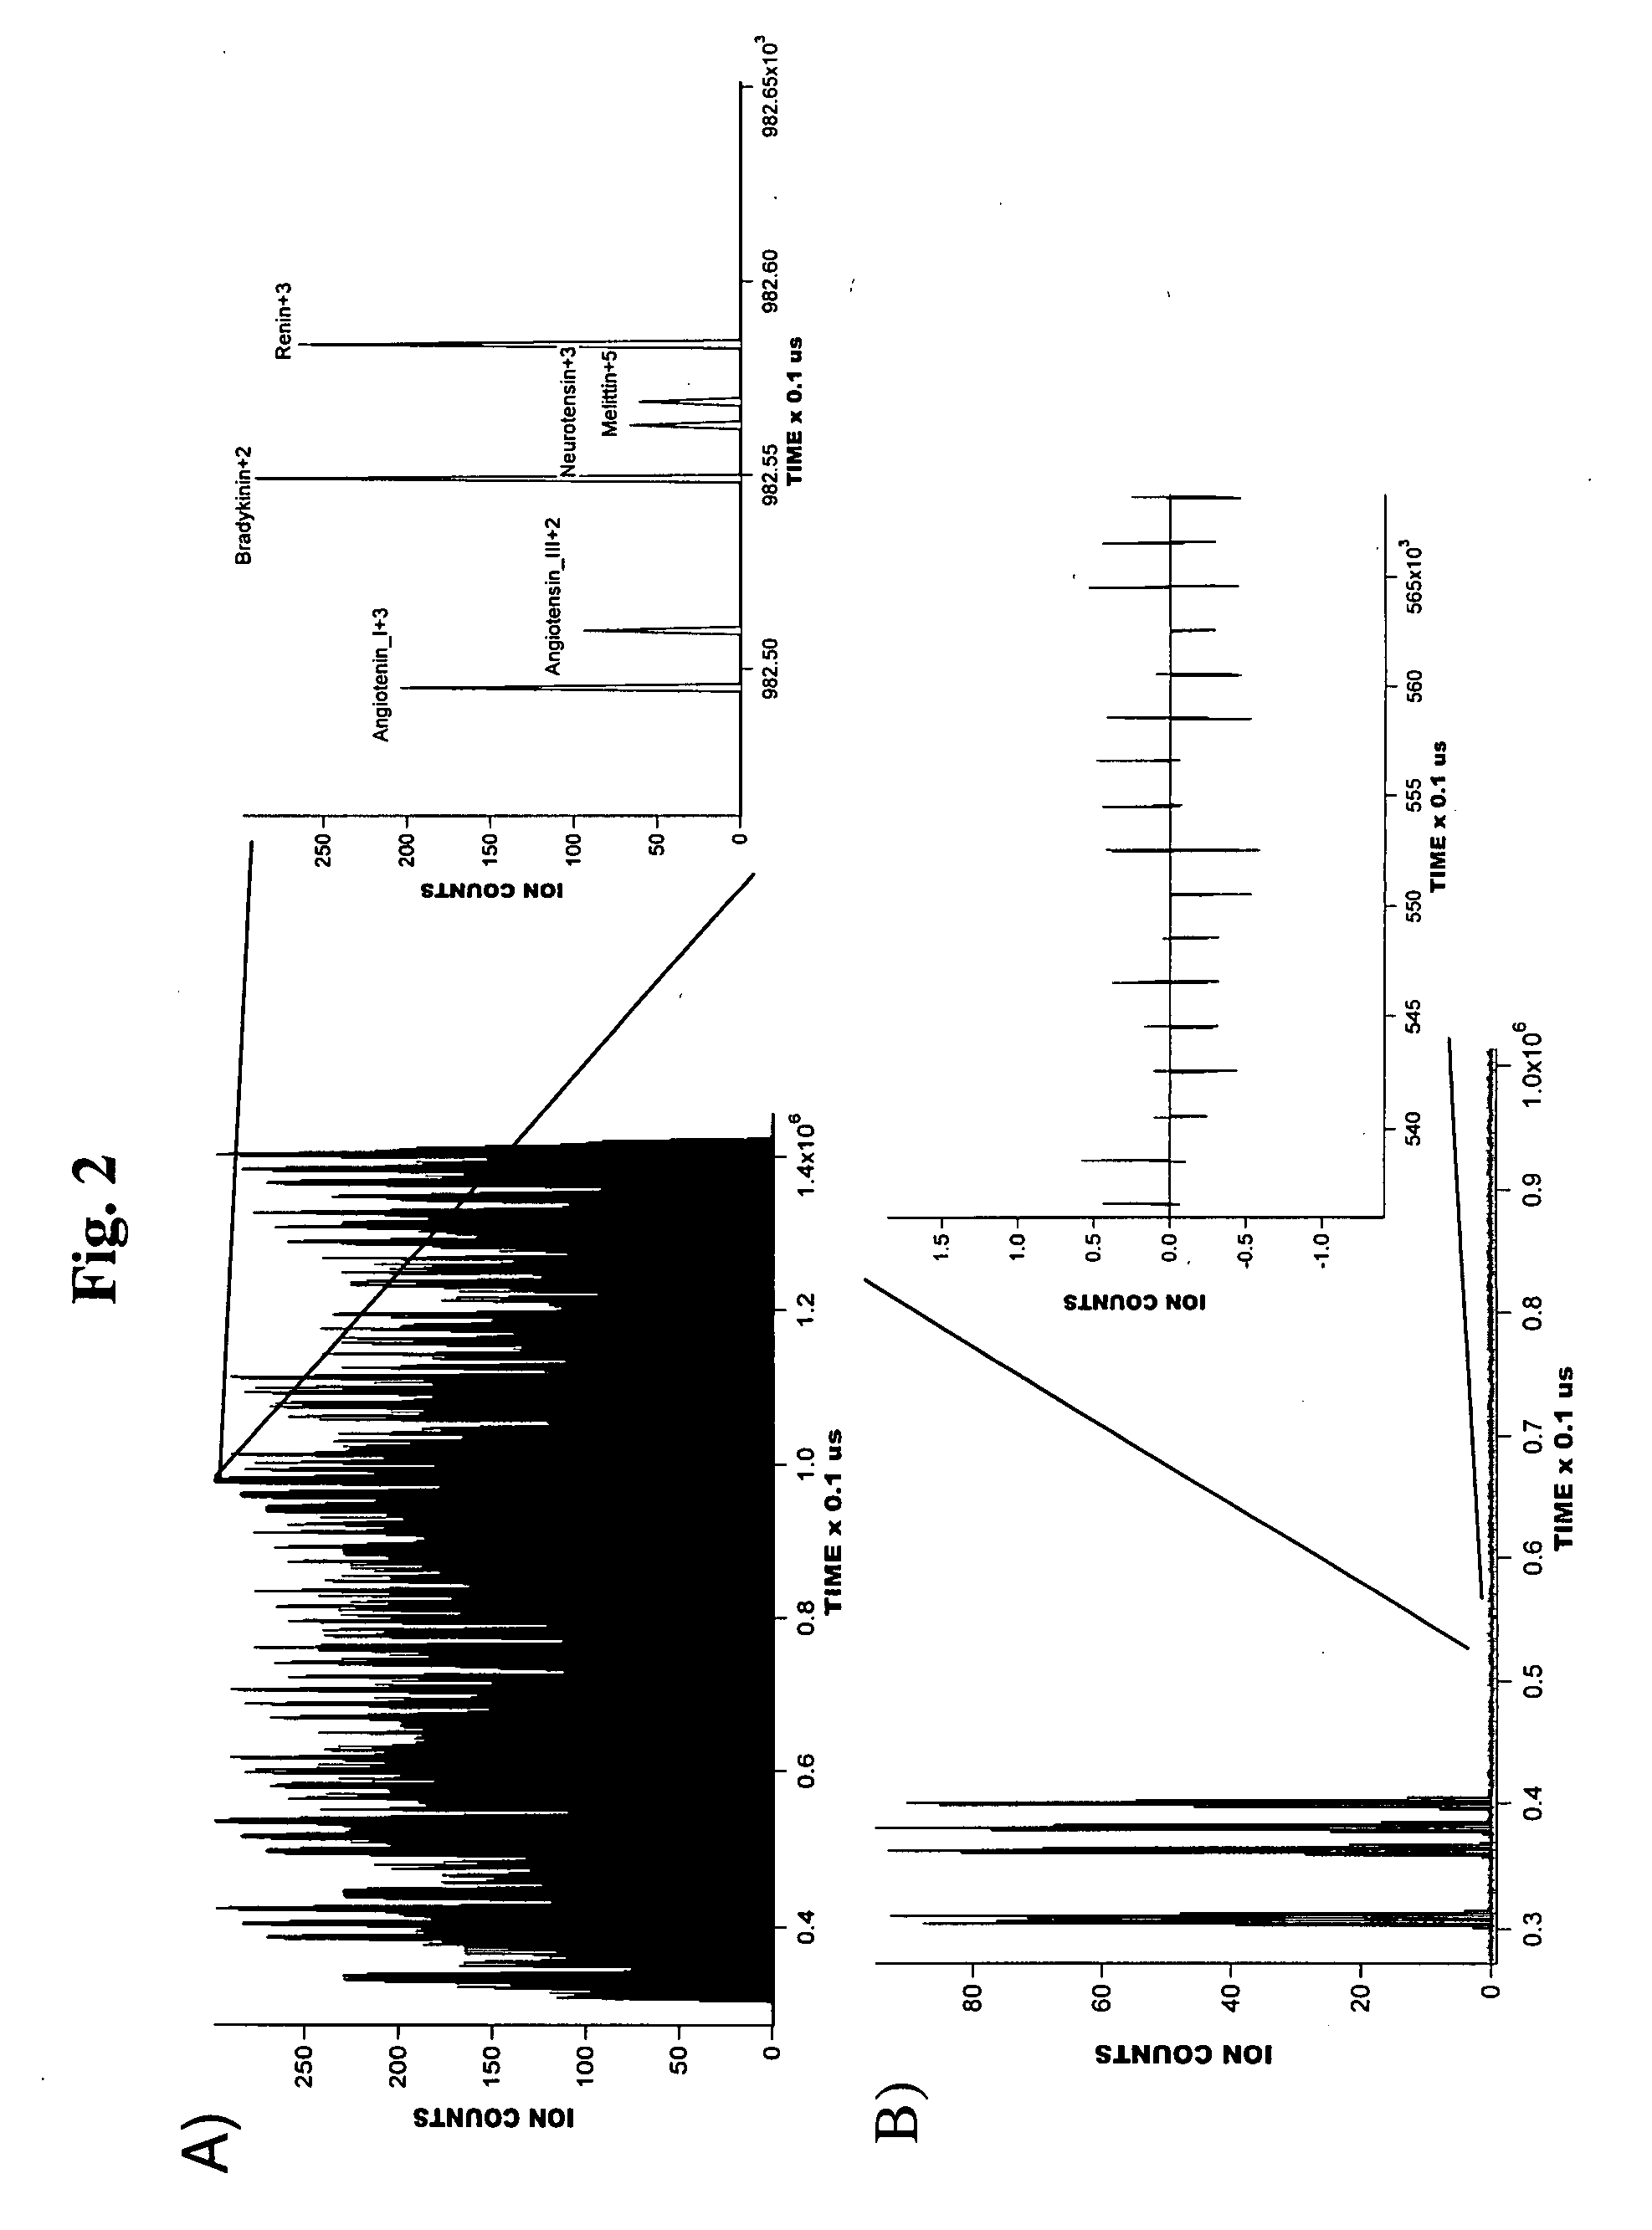 Method of multiplexed analysis using ion mobility spectrometer